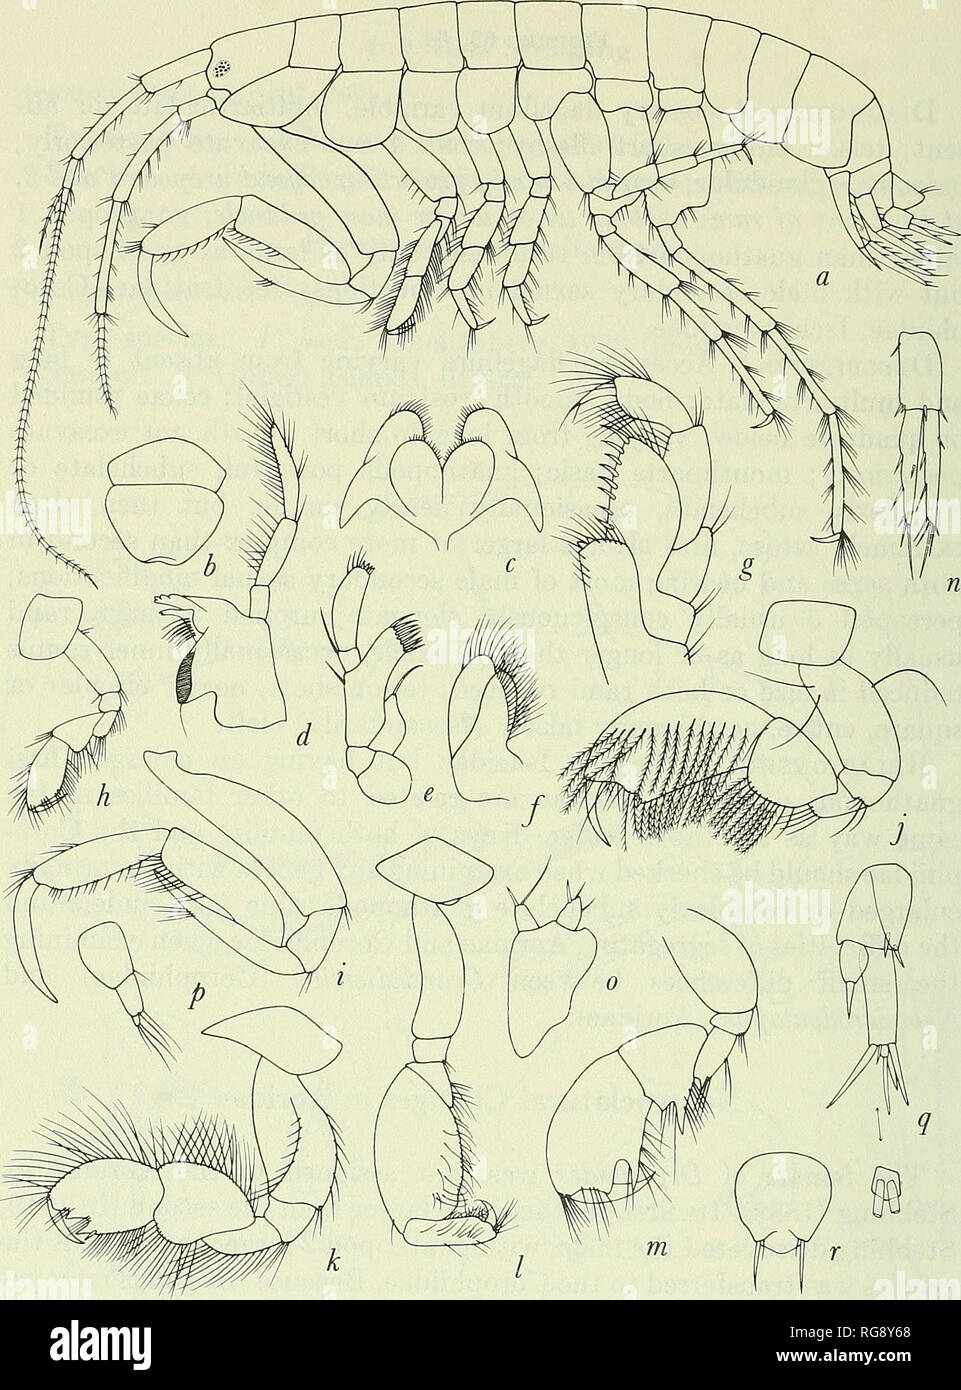 . Bulletin - United States National Museum. Science. 148 U.S. NATIONAL MUSEUM BULLETIN 271. Figure 63.—Aoridae: a, Aora typica Kr0yer (Sars, 1895, pi. 193, as A. gracilis). Aora: b, upper lip; c, mandible; d, lower lip; e, f, maxillae 1-2; g, maxilliped. Gnathopod 1: h, female Aora; i, male Aora; j, Xenocheira fasciata Haswell (Pirlot, 1938); k, Lembos websteri Bate (Sars, 1895, pi. 194); /, Rudilemboides stenopropodus J. L. Barnard (1959a); m, Lembopsis spinicarpus Pearse (1912). Uropod 3: n, Aora; o, Dryopoides tvestwoodi Stebbing (1888); p, Paraoroides unistilus Stebbing (1910); q, Acuminod Stock Photo